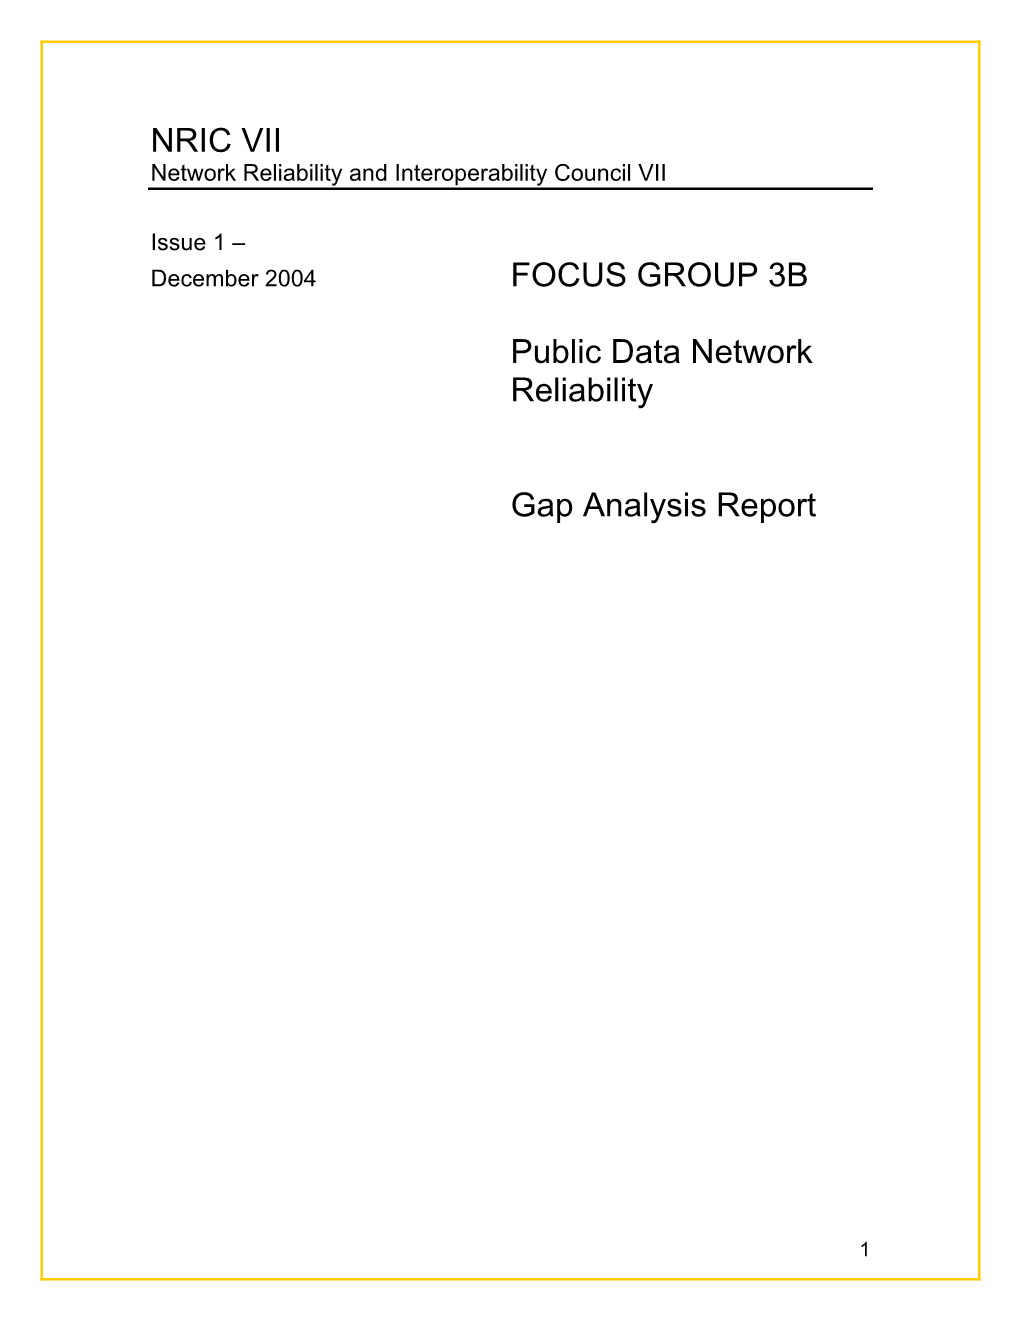 NRIC VII FOCUS GROUP 3B Public Data Network Reliability Gap